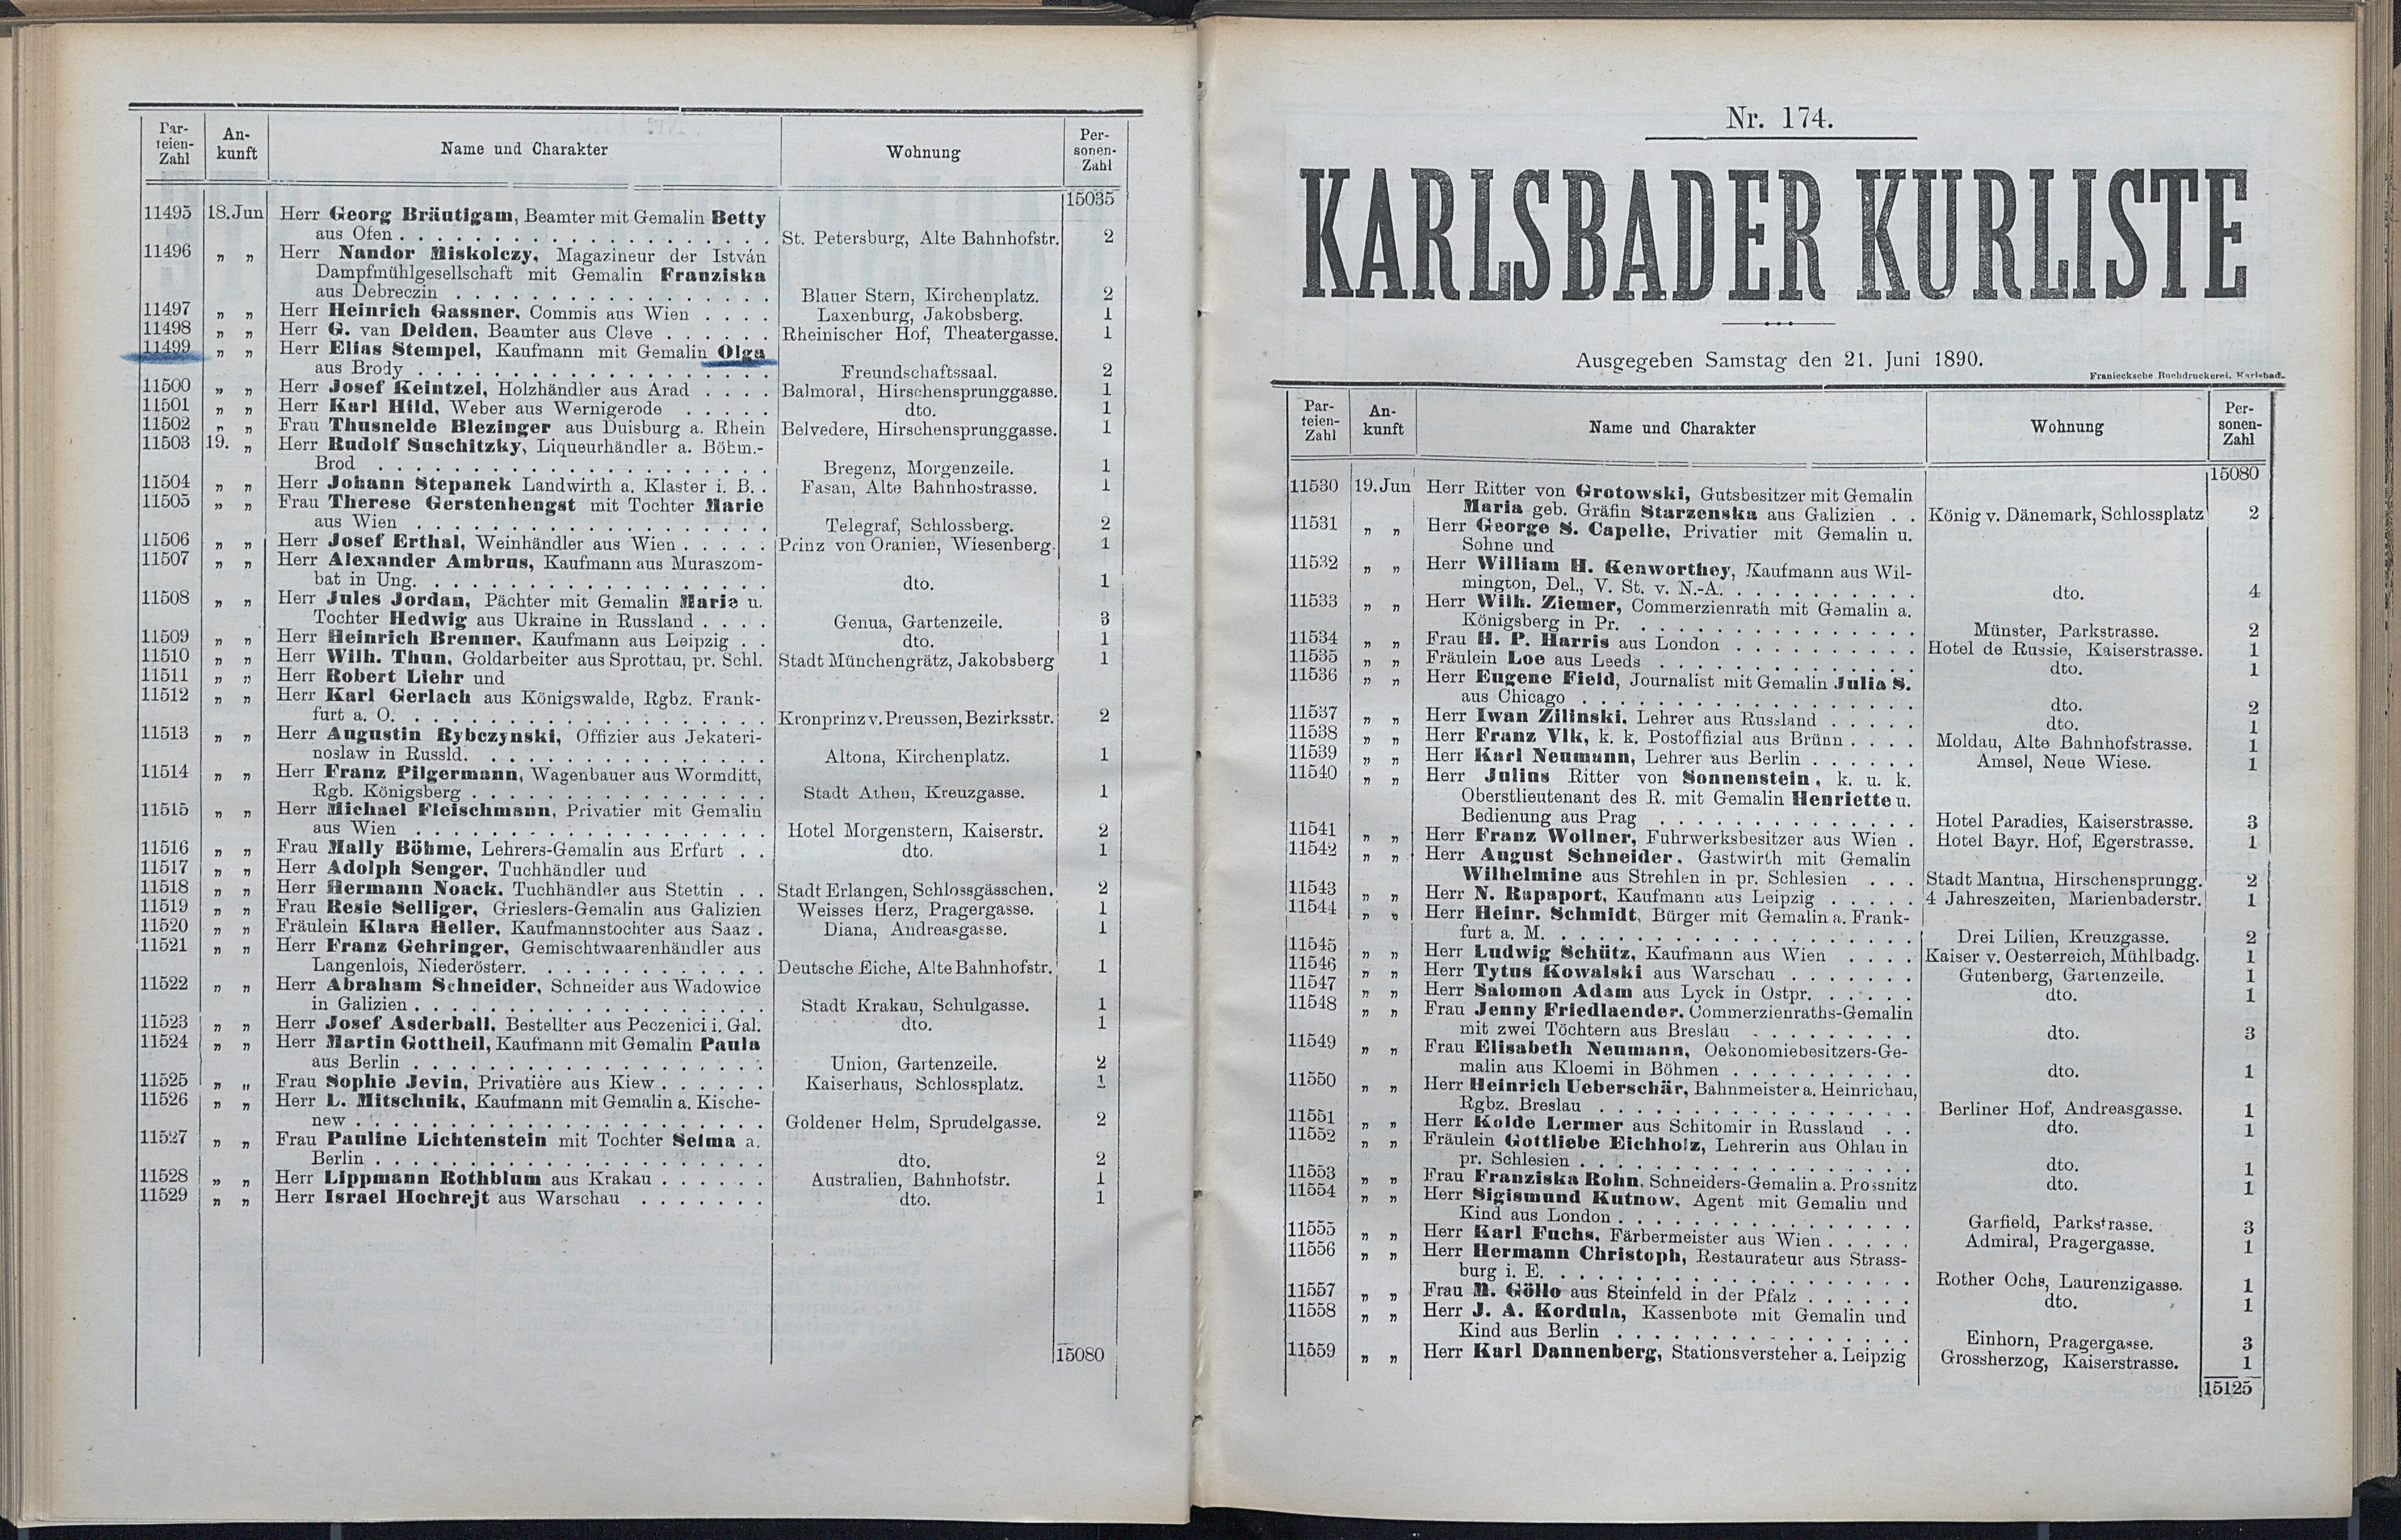 193. soap-kv_knihovna_karlsbader-kurliste-1890_1940